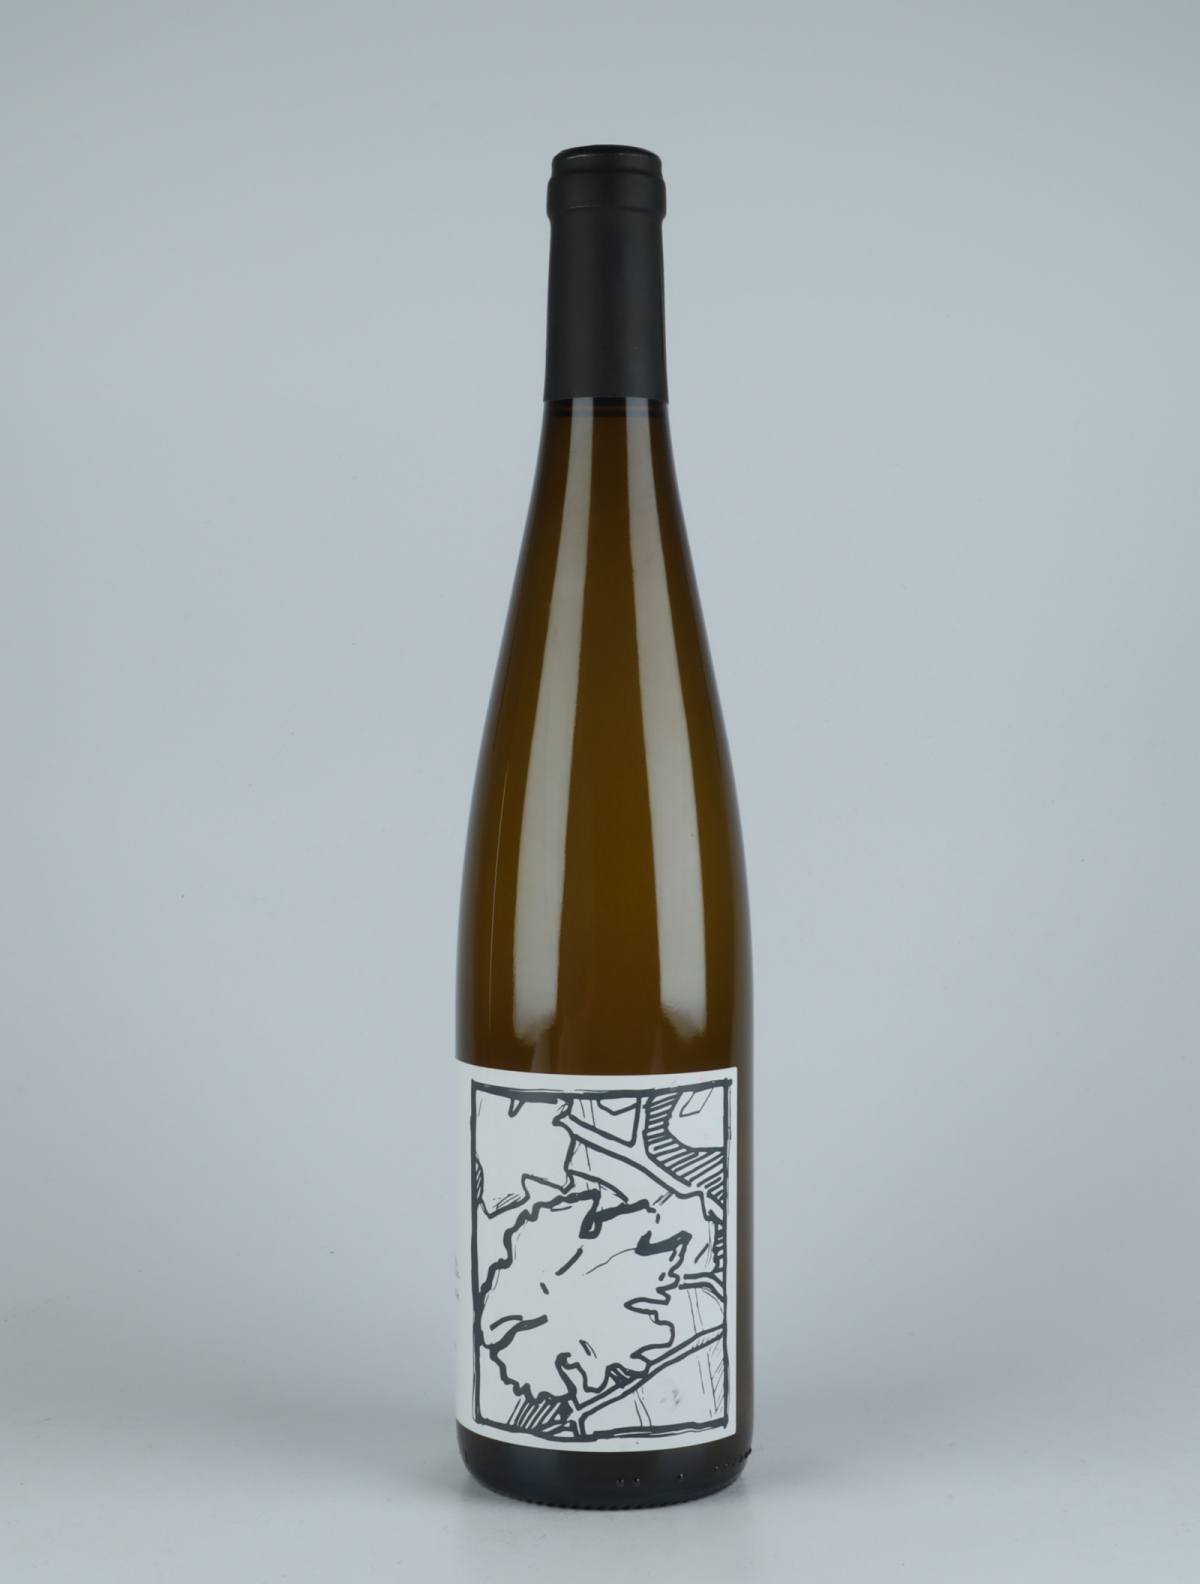 A bottle 2020 Sylvaner White wine from Domaine Goepp, Alsace in France